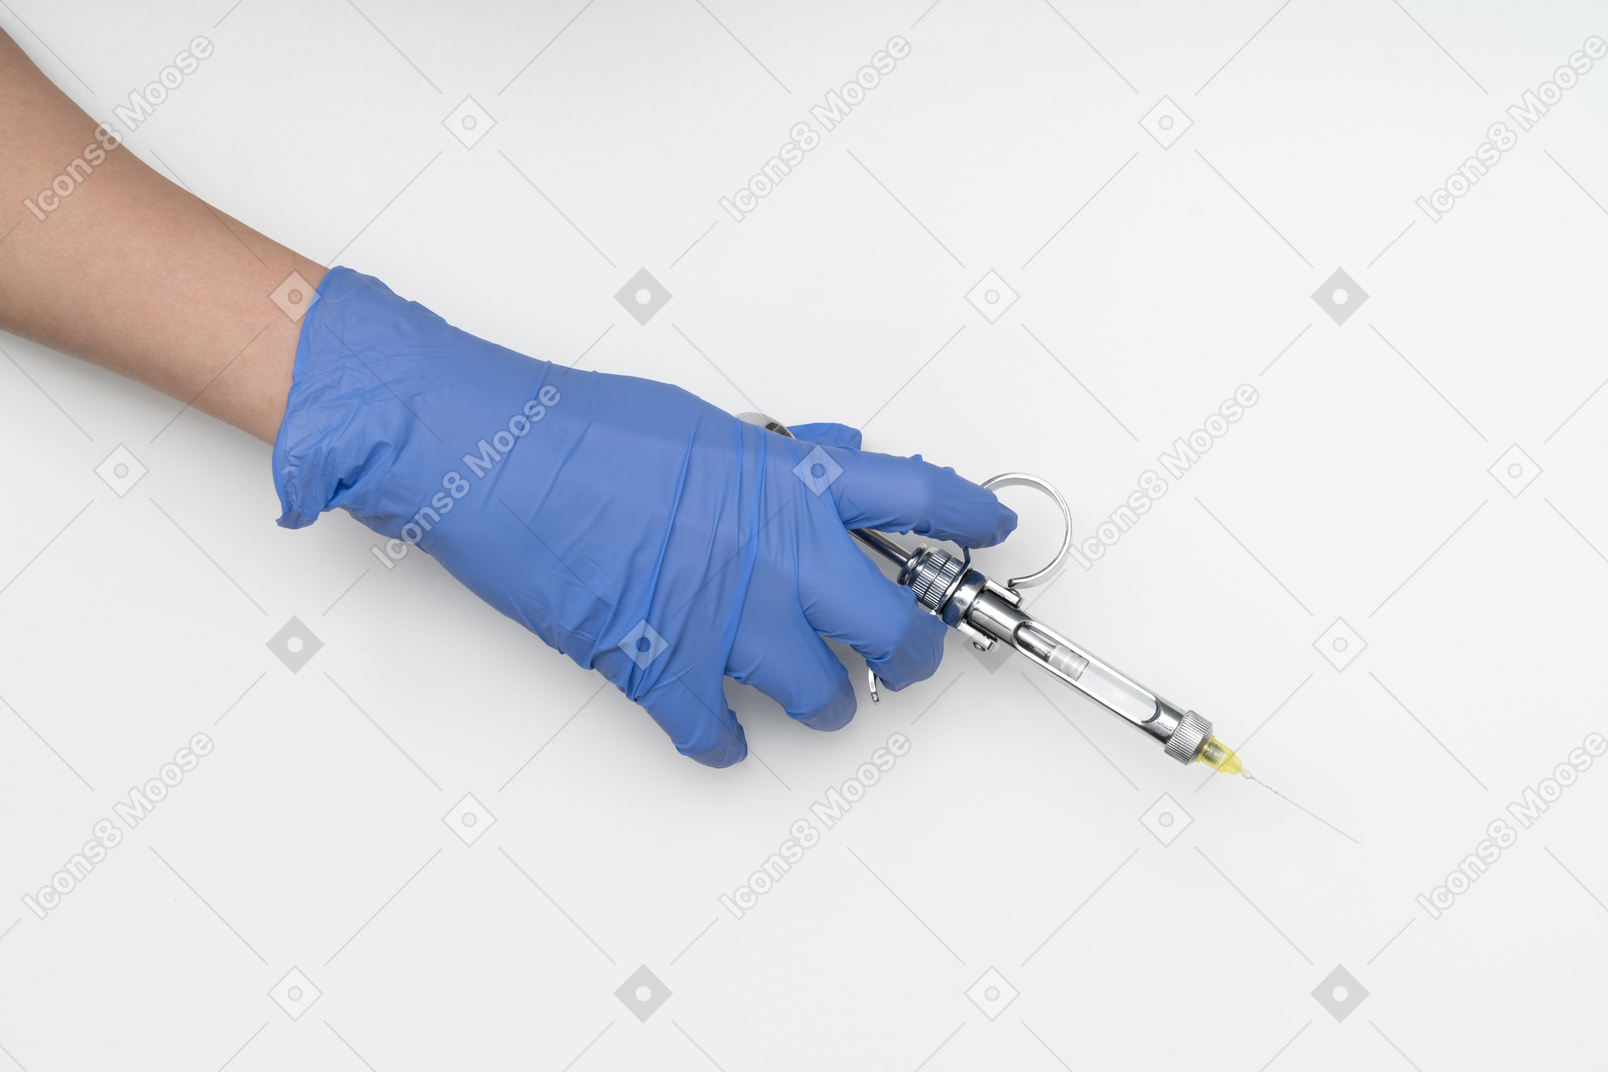 Mão na luva protetora segurando uma seringa